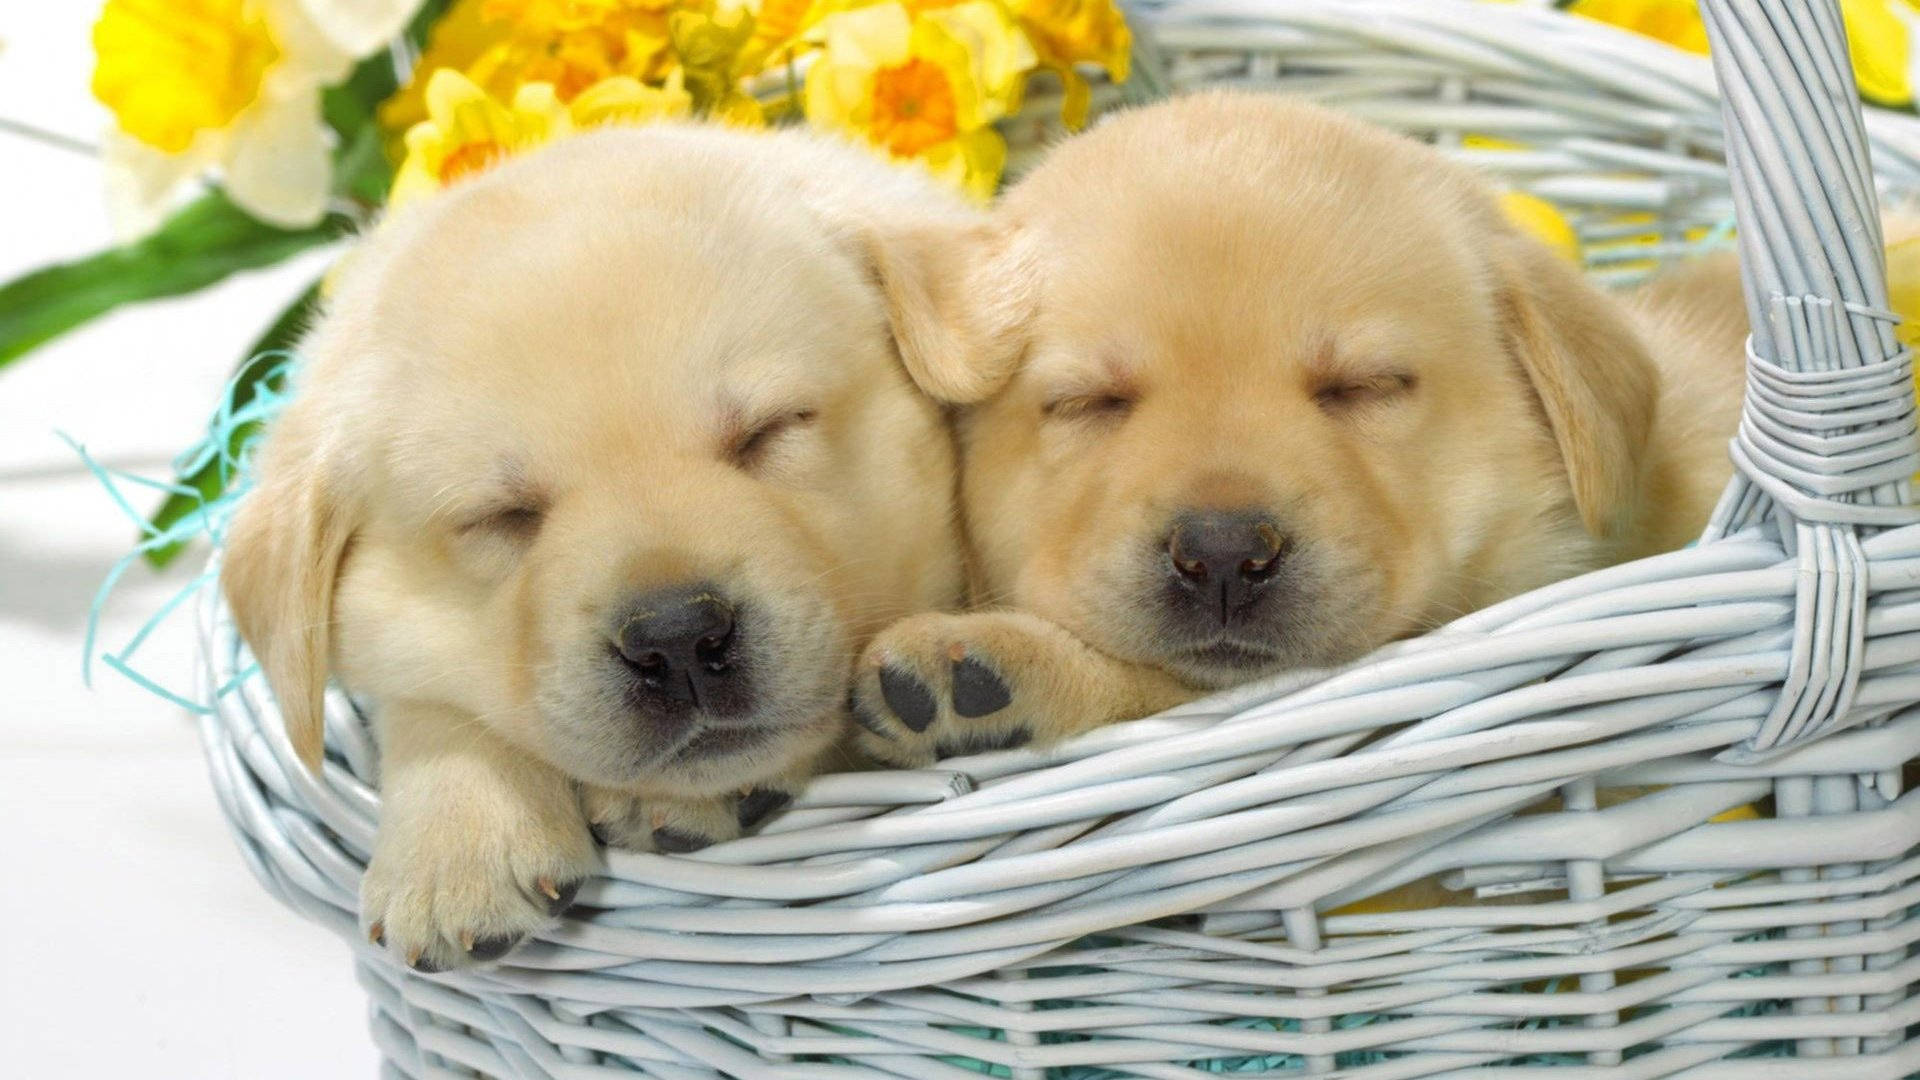 Sleeping Retriever Dogs Inside A Basket Background